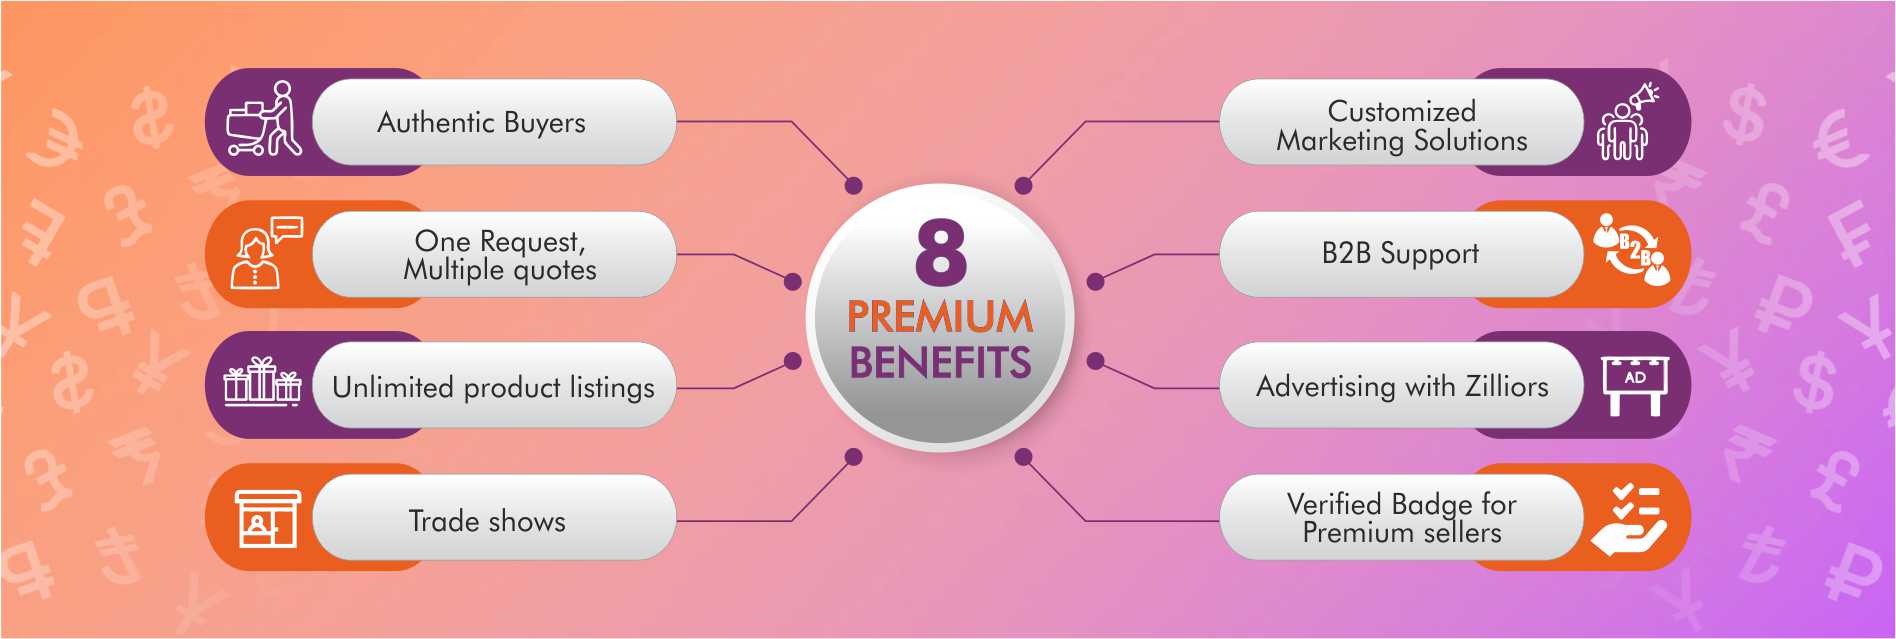 premium benefits banner